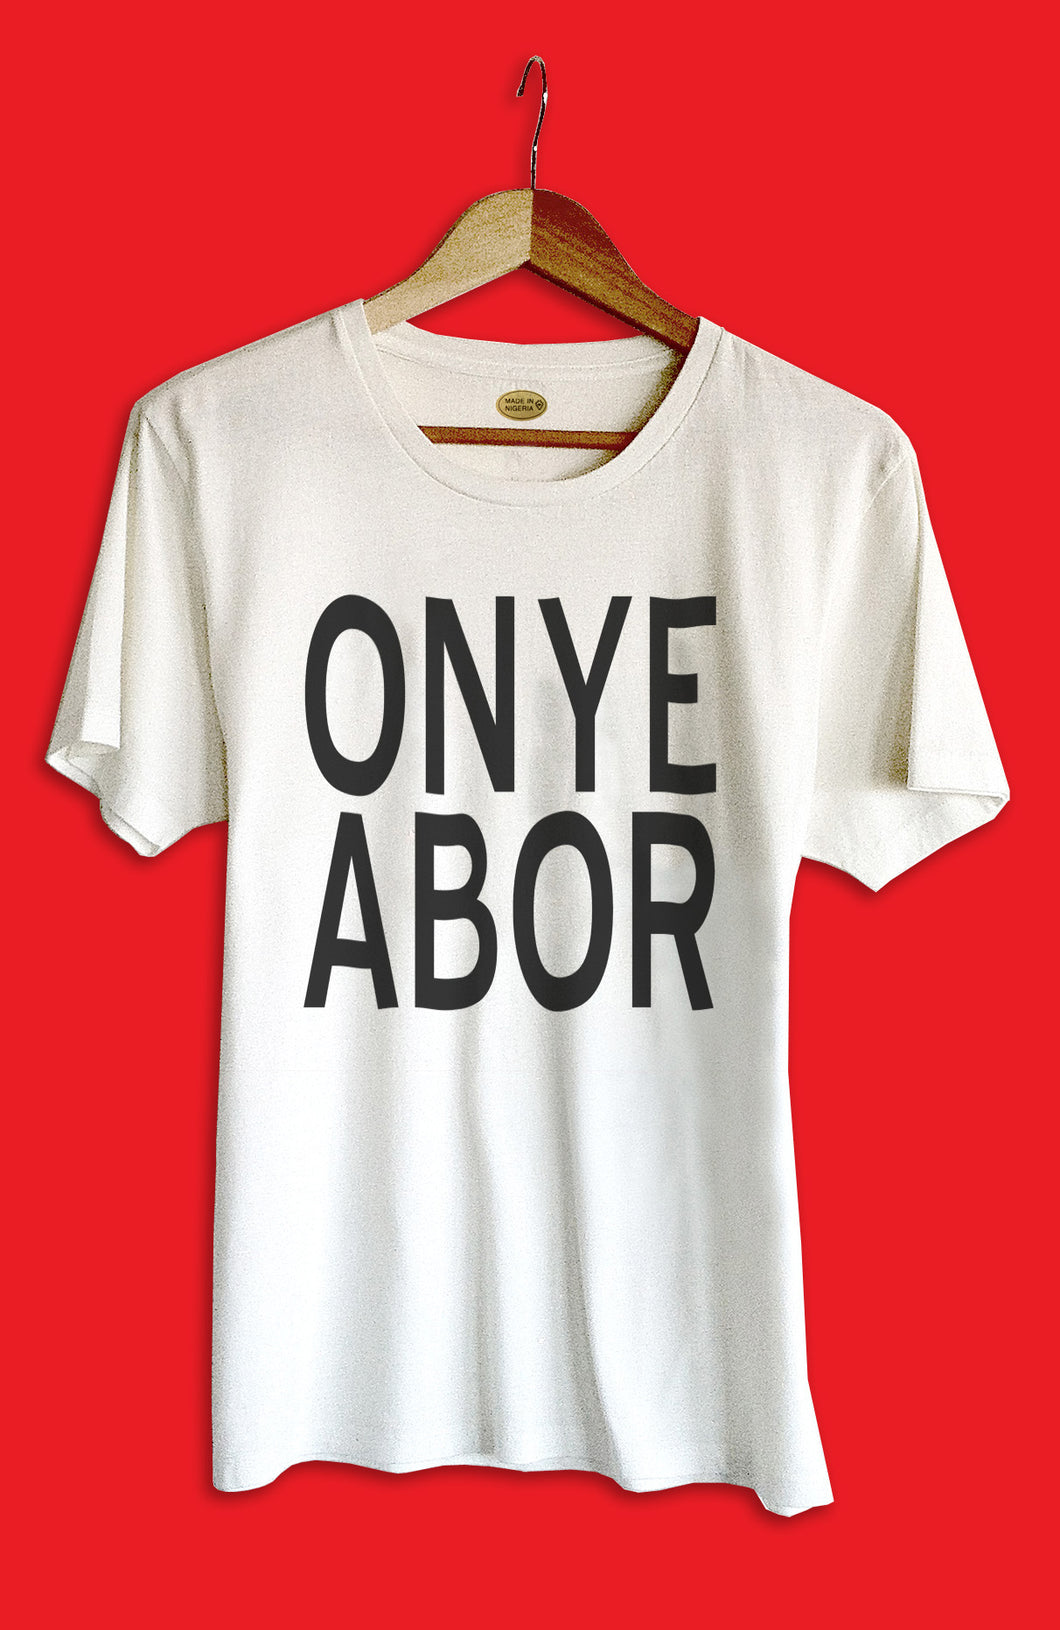 ONYEABOR Cotton T-Shirt